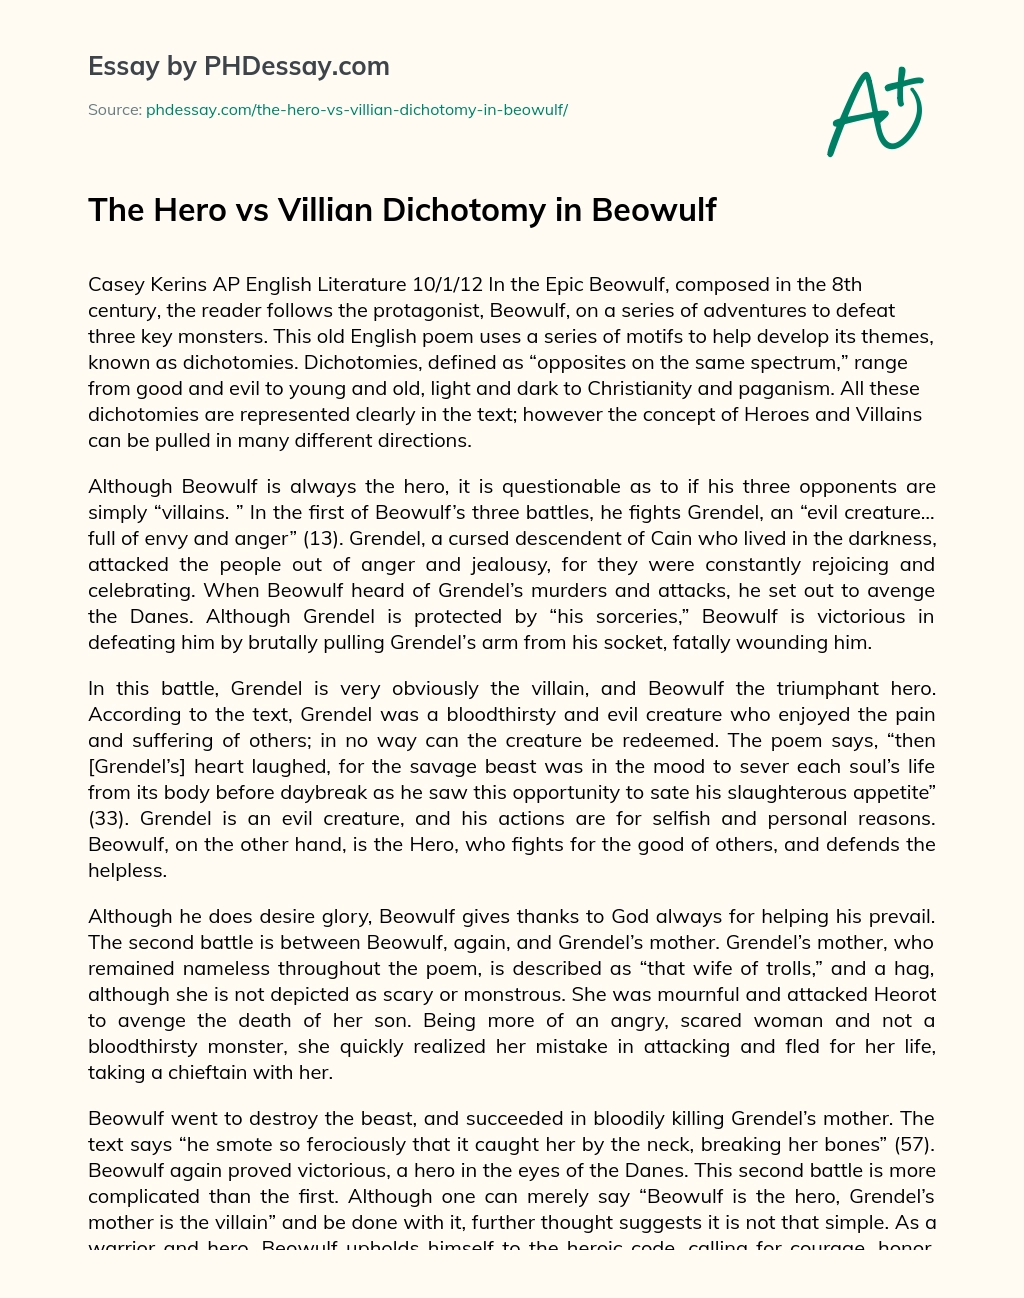 The Hero vs Villian Dichotomy in Beowulf essay